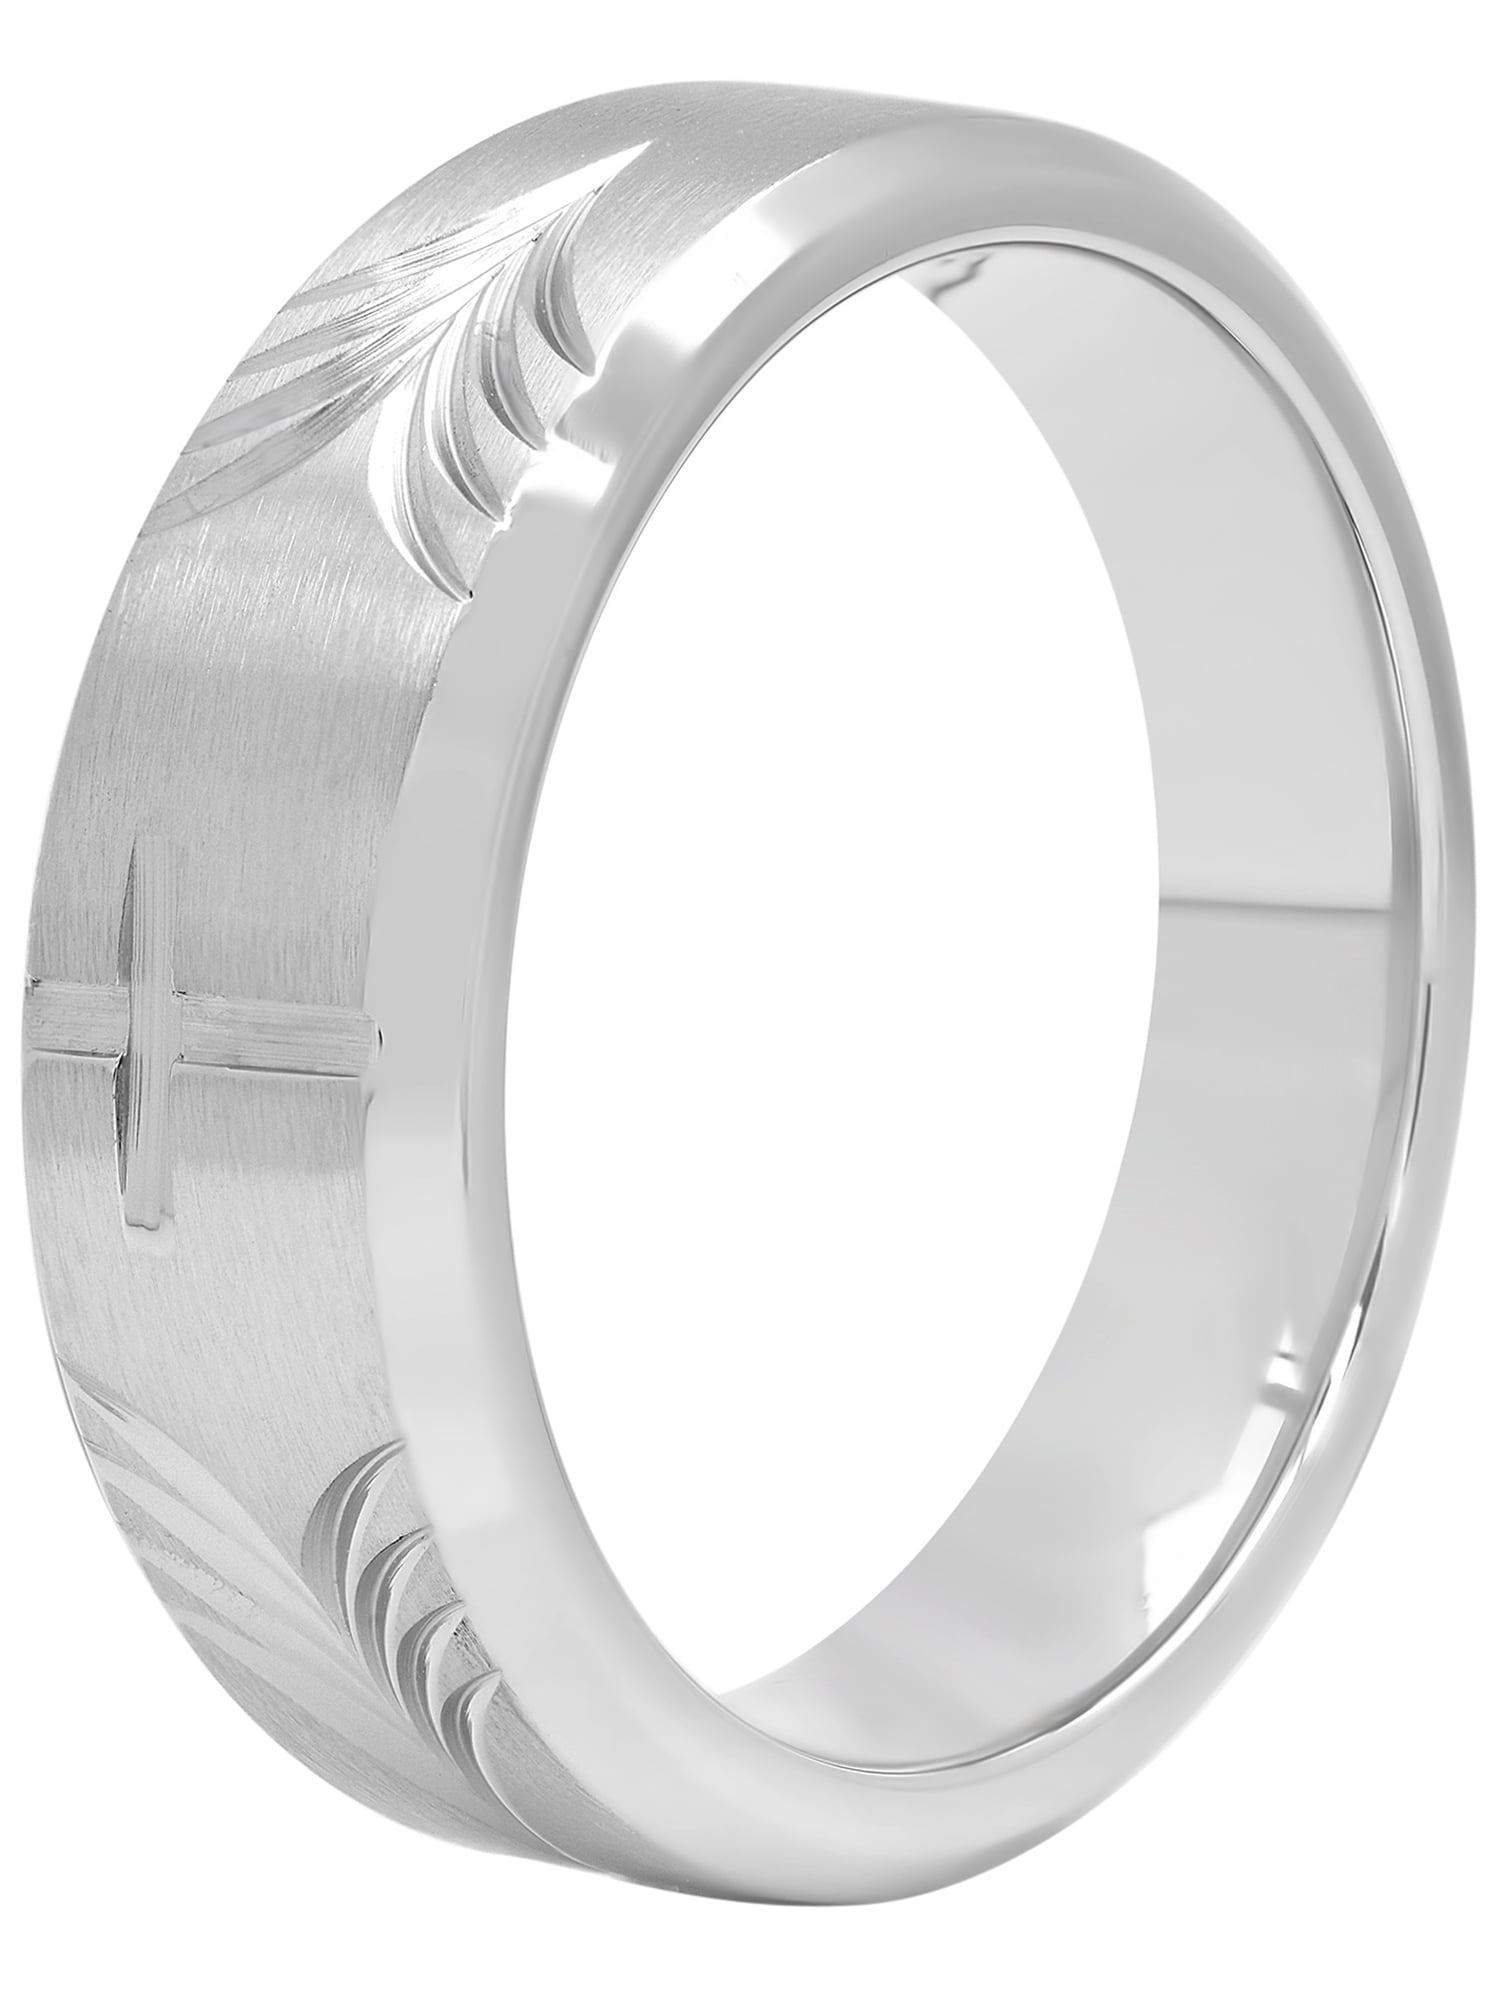 3.3 g 18K 5MM Milgrain Ladies & Mens Wedding Band Super Jeweler Men Accessories Jewelry Rings 